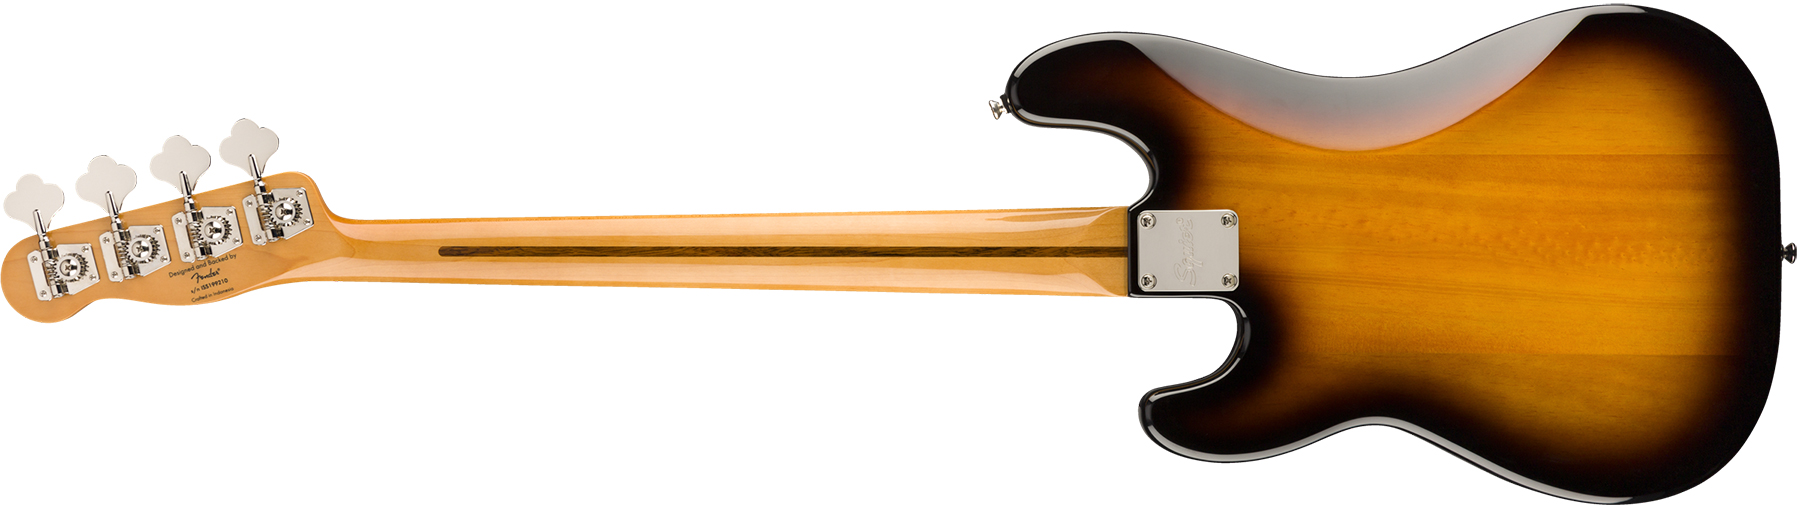 Squier Precision Bass '50s Classic Vibe 2019 Mn - 2-color Sunburst - Solid body elektrische bas - Variation 1